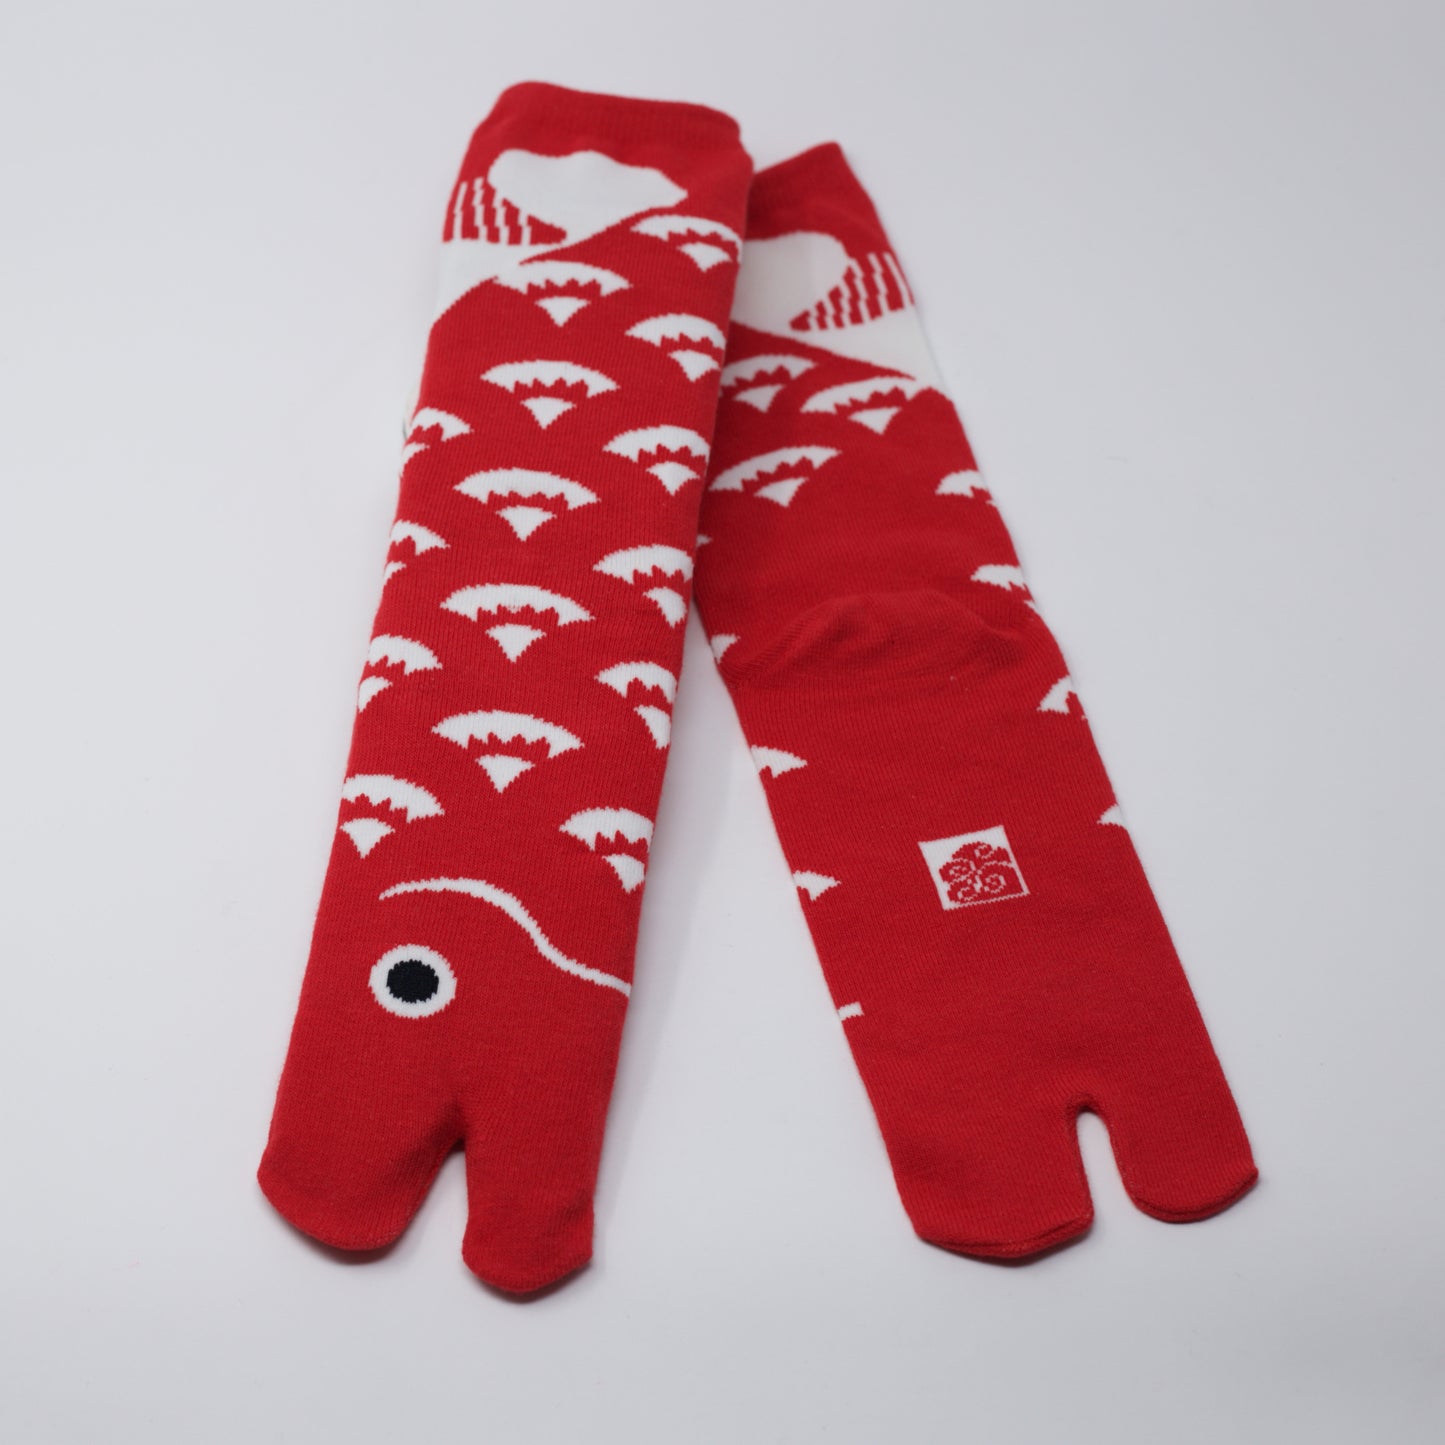 Tabi : the traditional Japanese socks